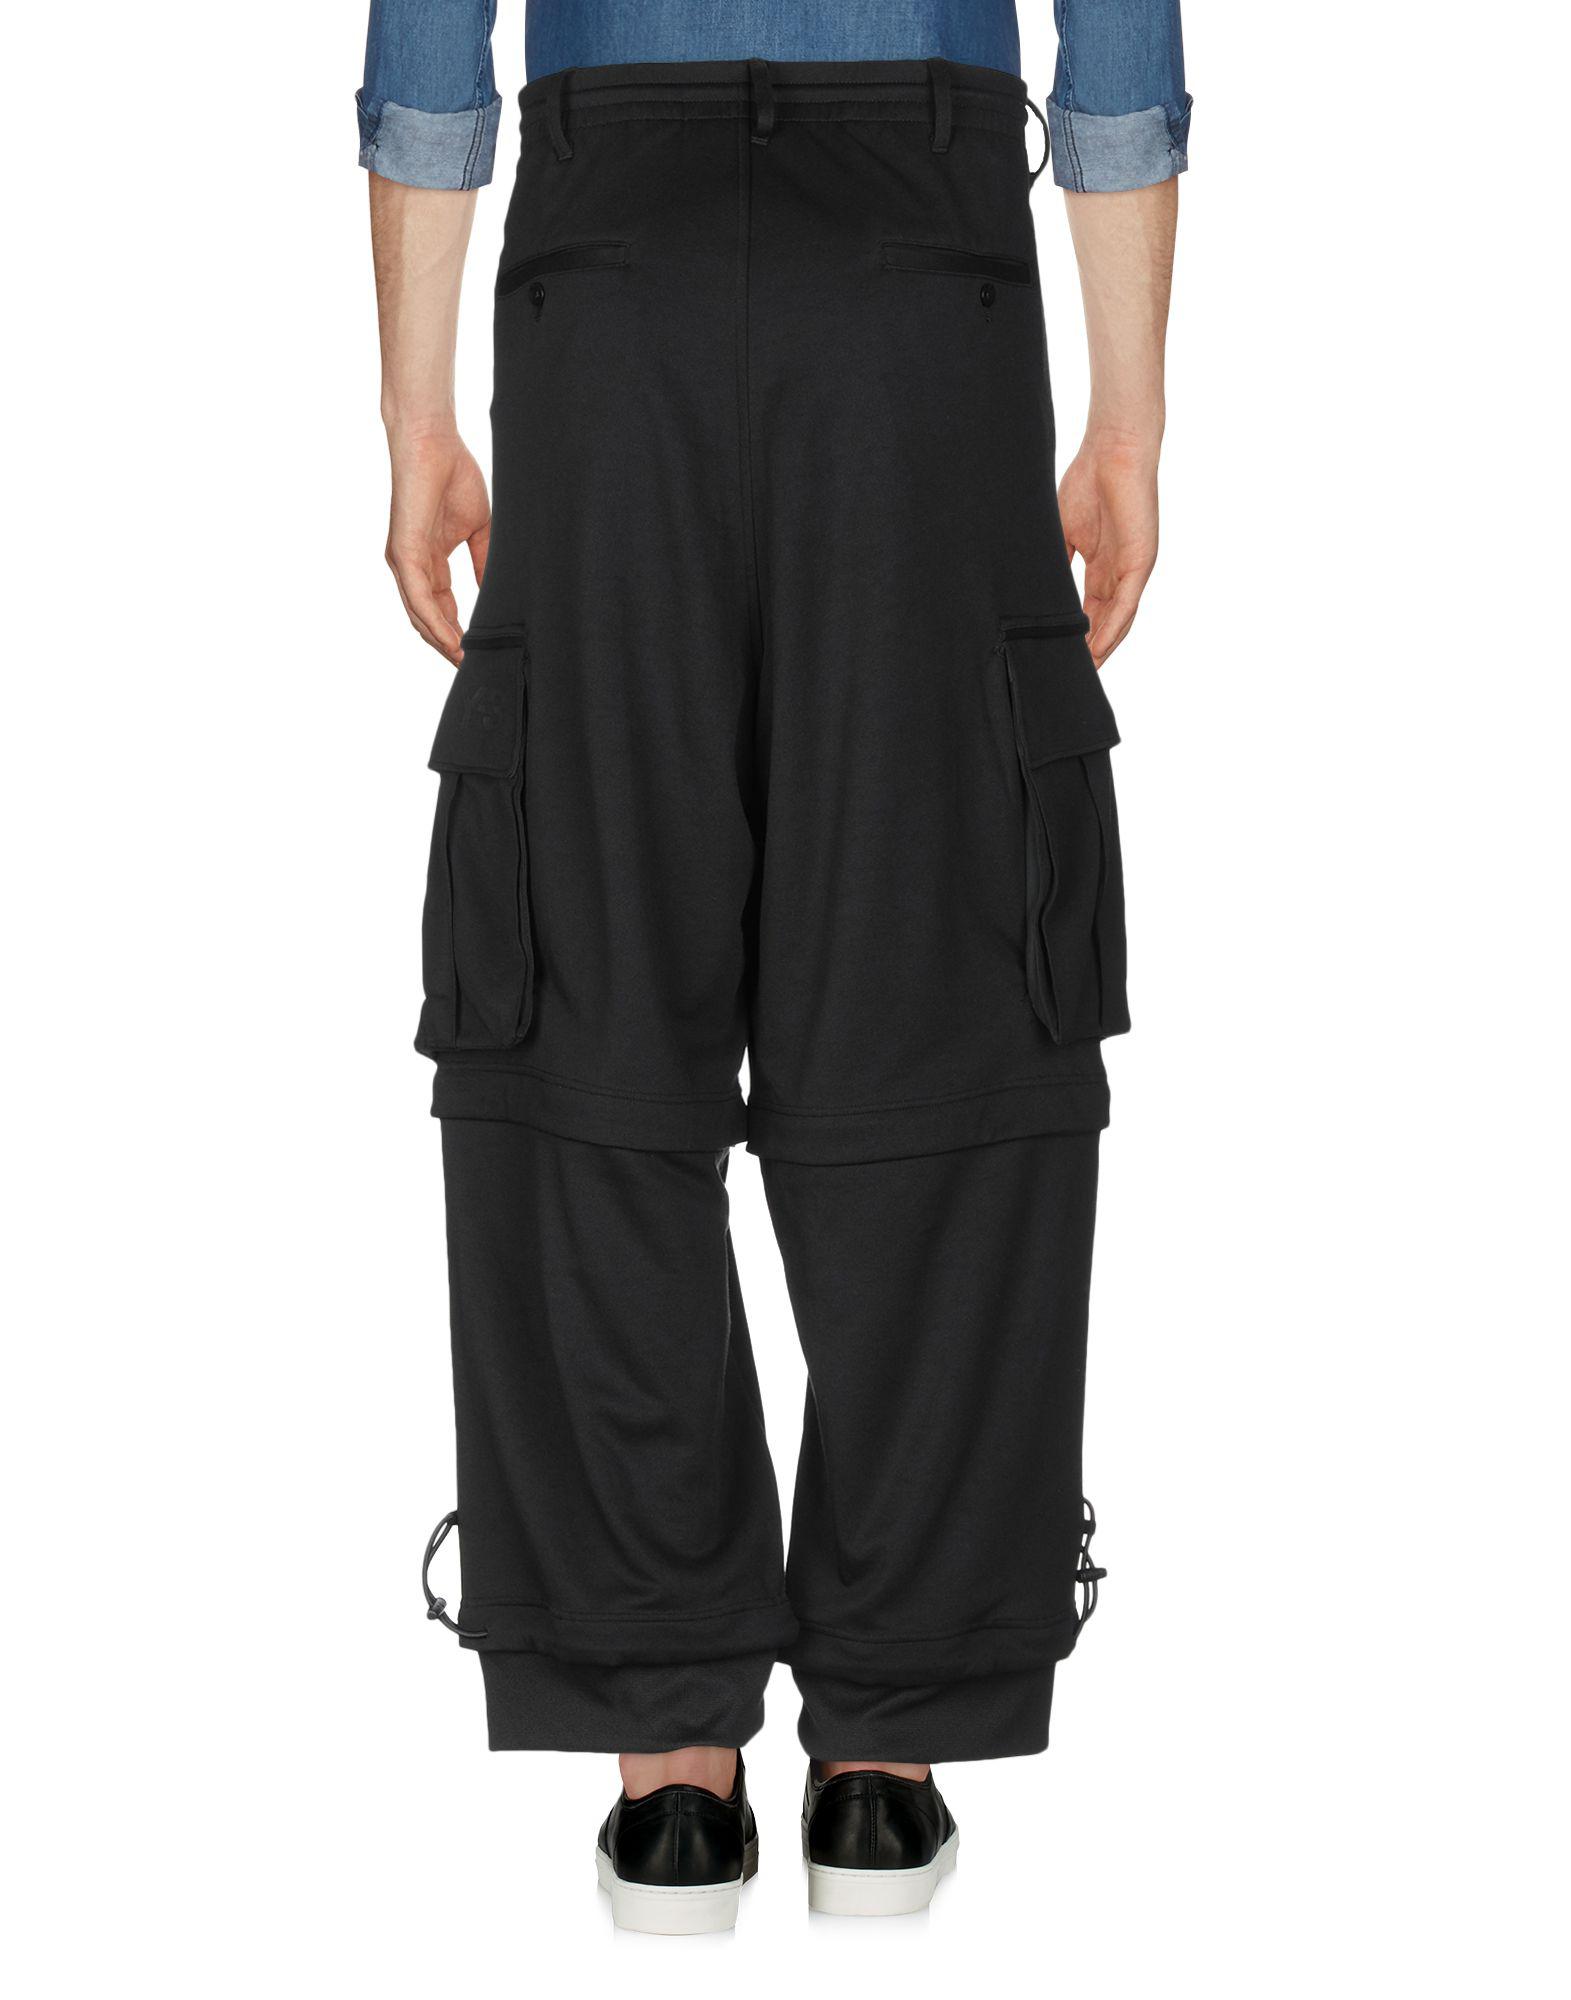 Yohji Yamamoto Casual Pants in Black for Men - Lyst